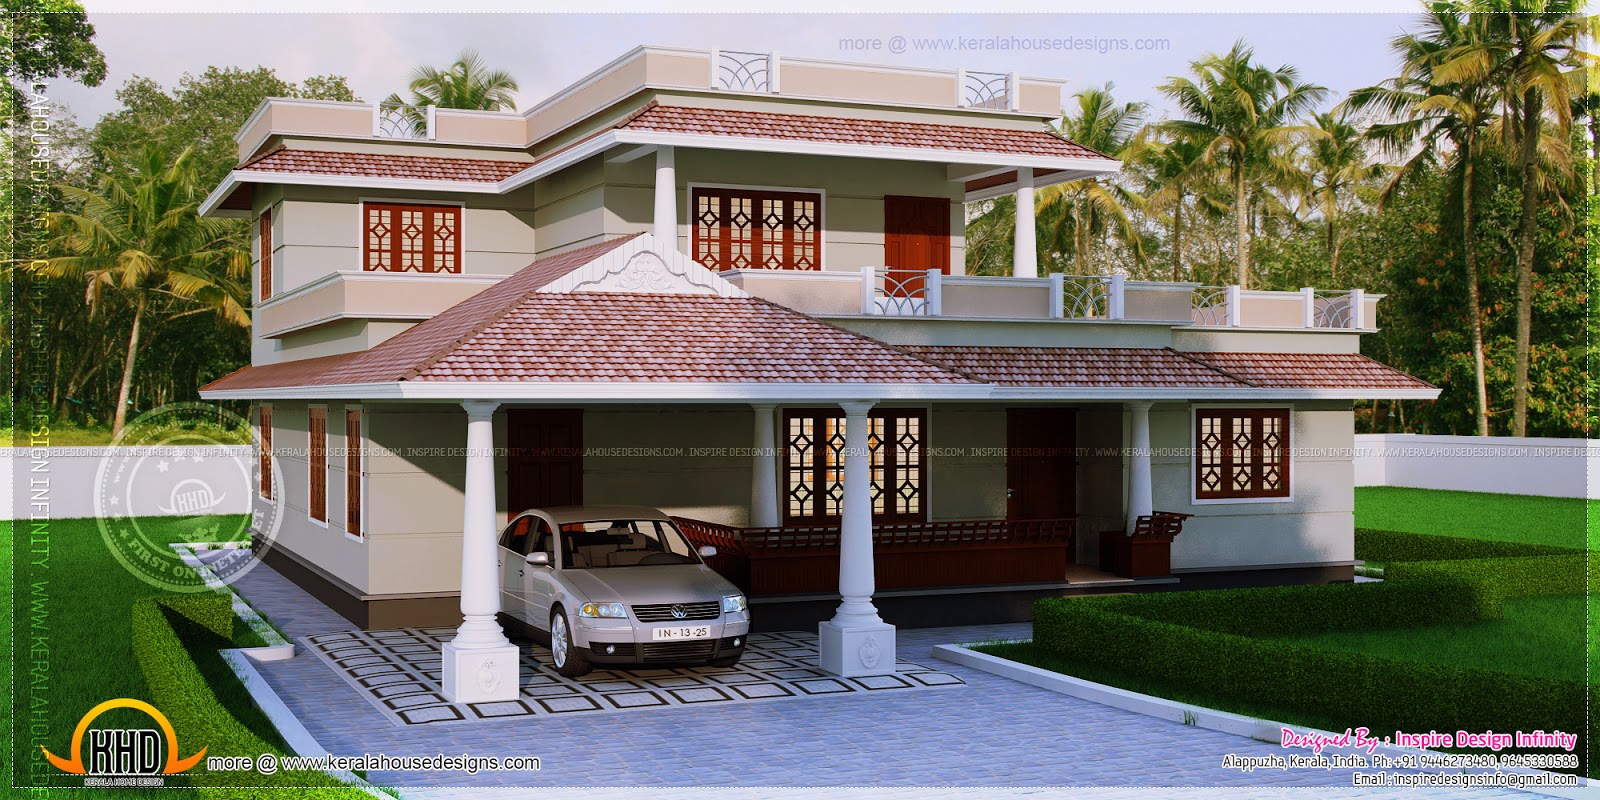 4 bedroom Kerala style  house  in 300 square  yards Kerala 